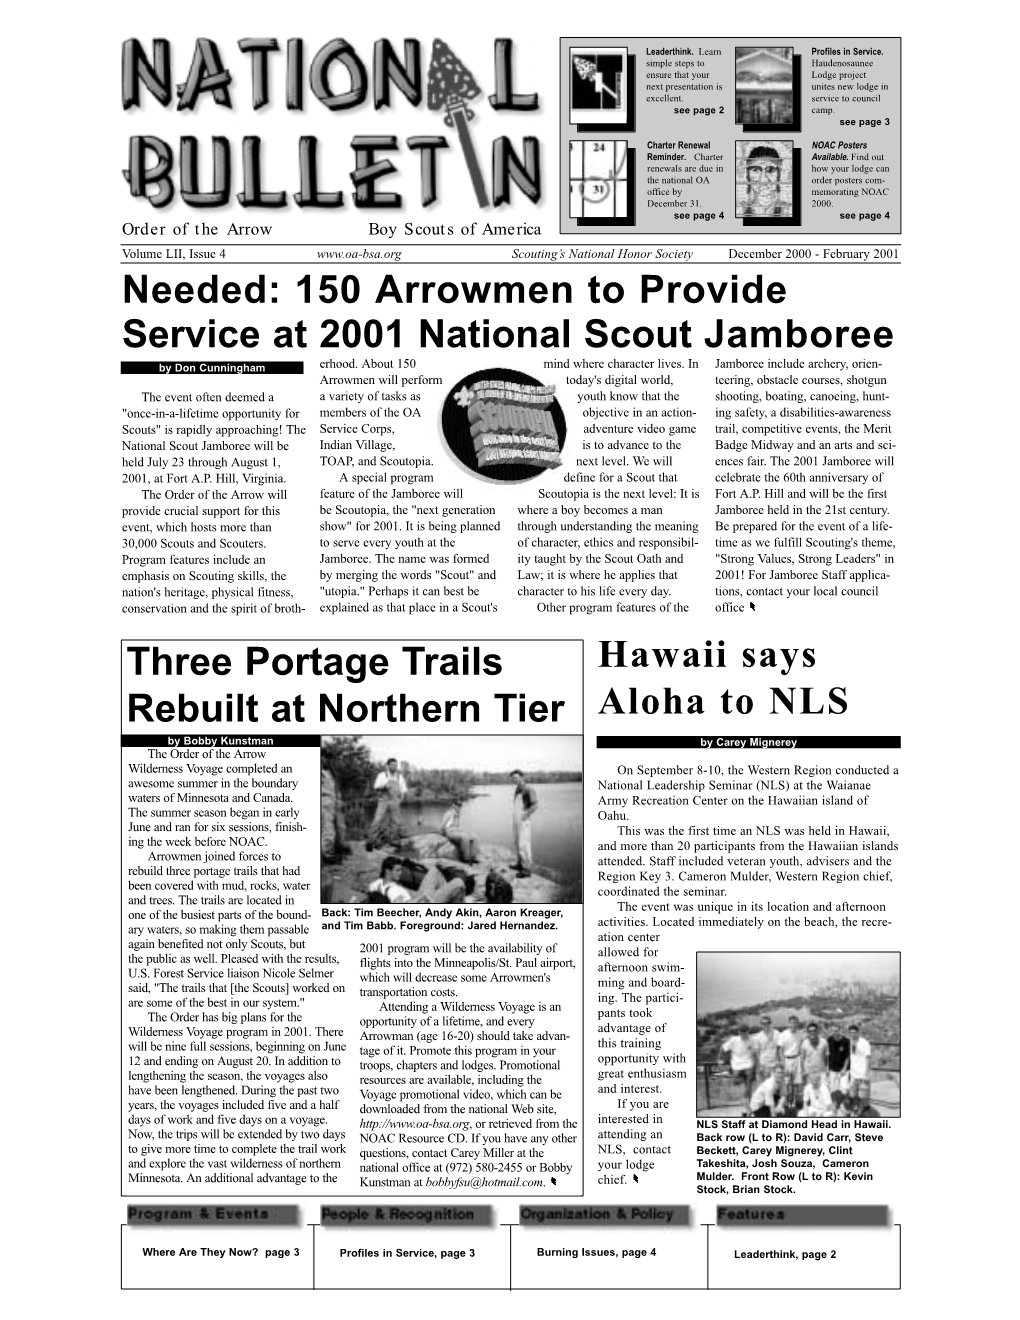 150 Arrowmen to Provide Service at 2001 National Scout Jamboree Hawaii Says Aloha to NLS Three Portage Trails Rebuilt At